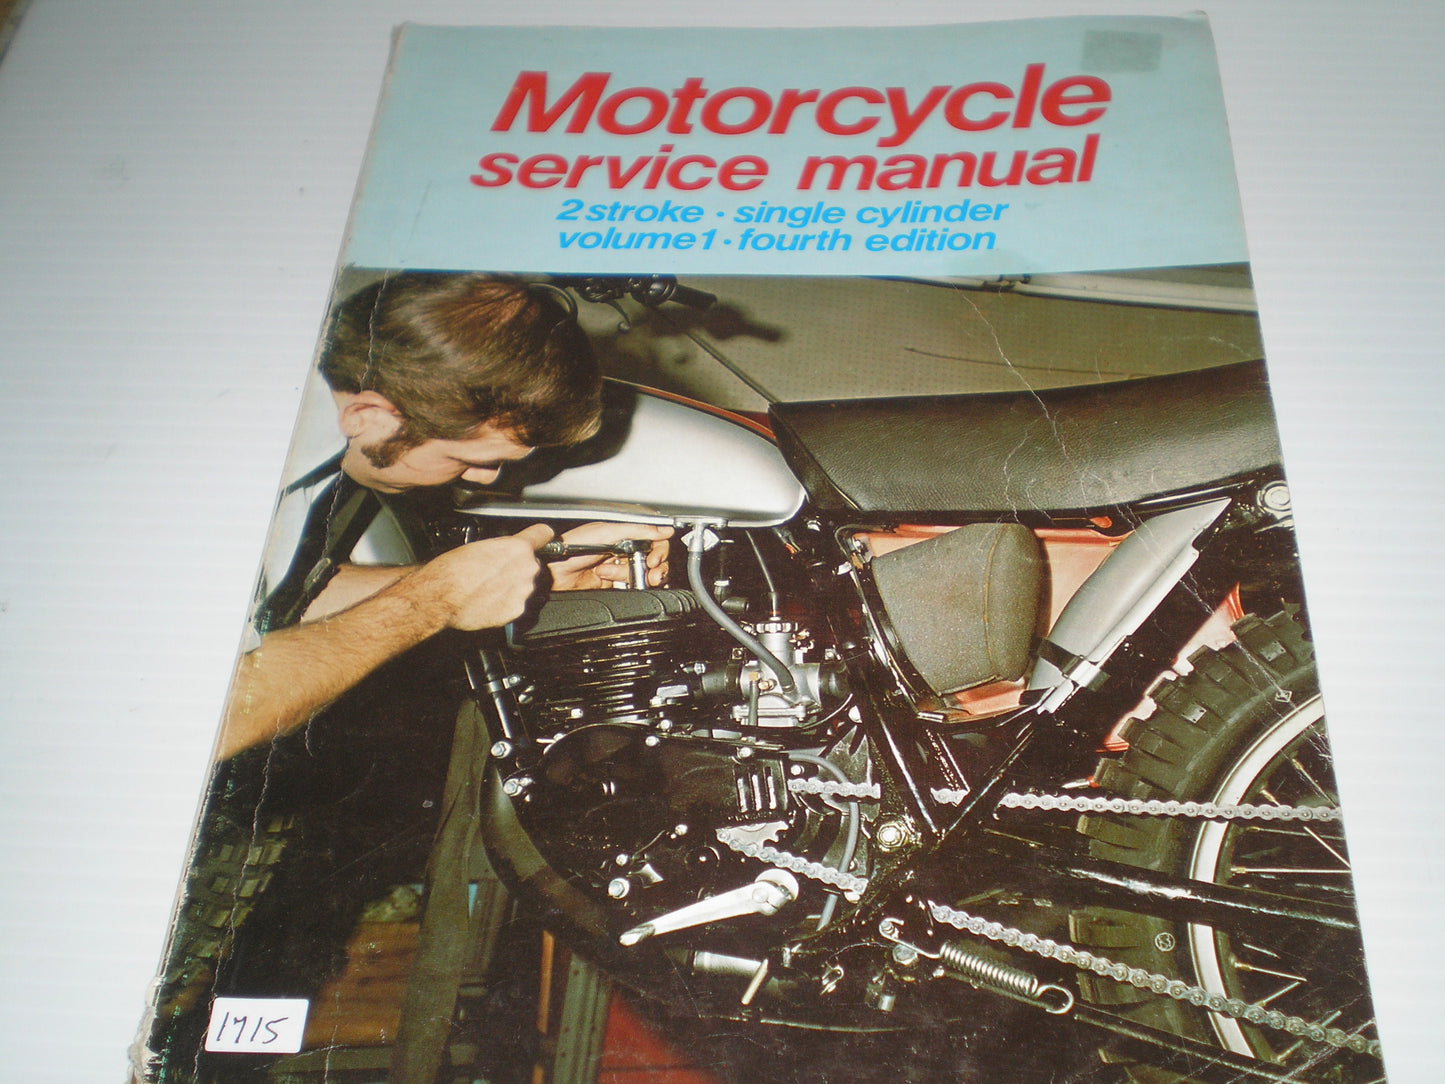 Motorcycle  2 Stroke - Single Cylinder  Intertec Service Manual Vol.1 - 4th Edition  MCS1-4 (21137)  #1663